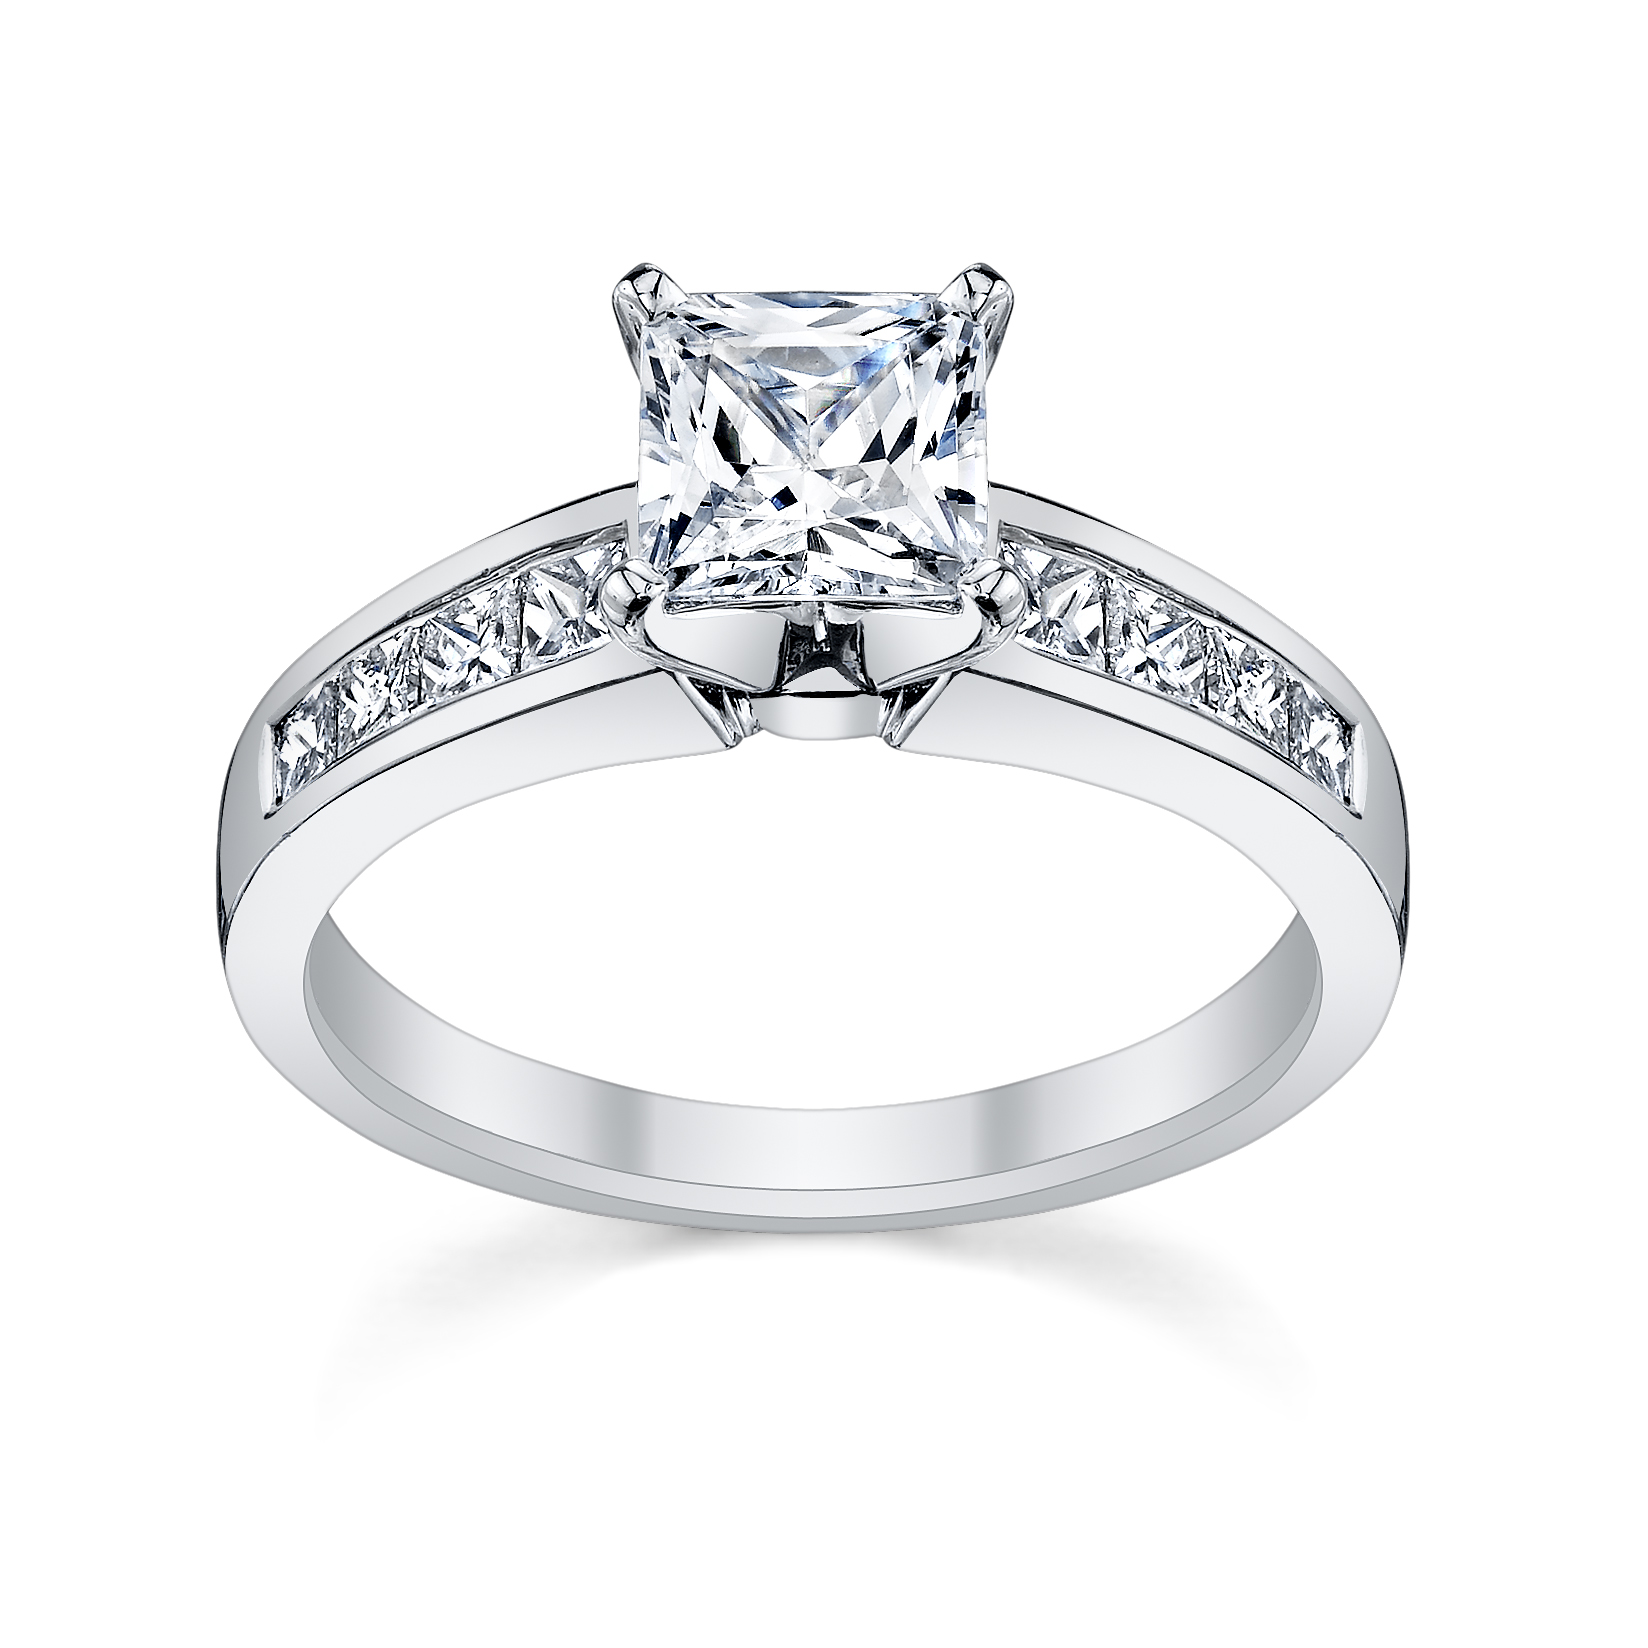 Jared princess cut diamond rings